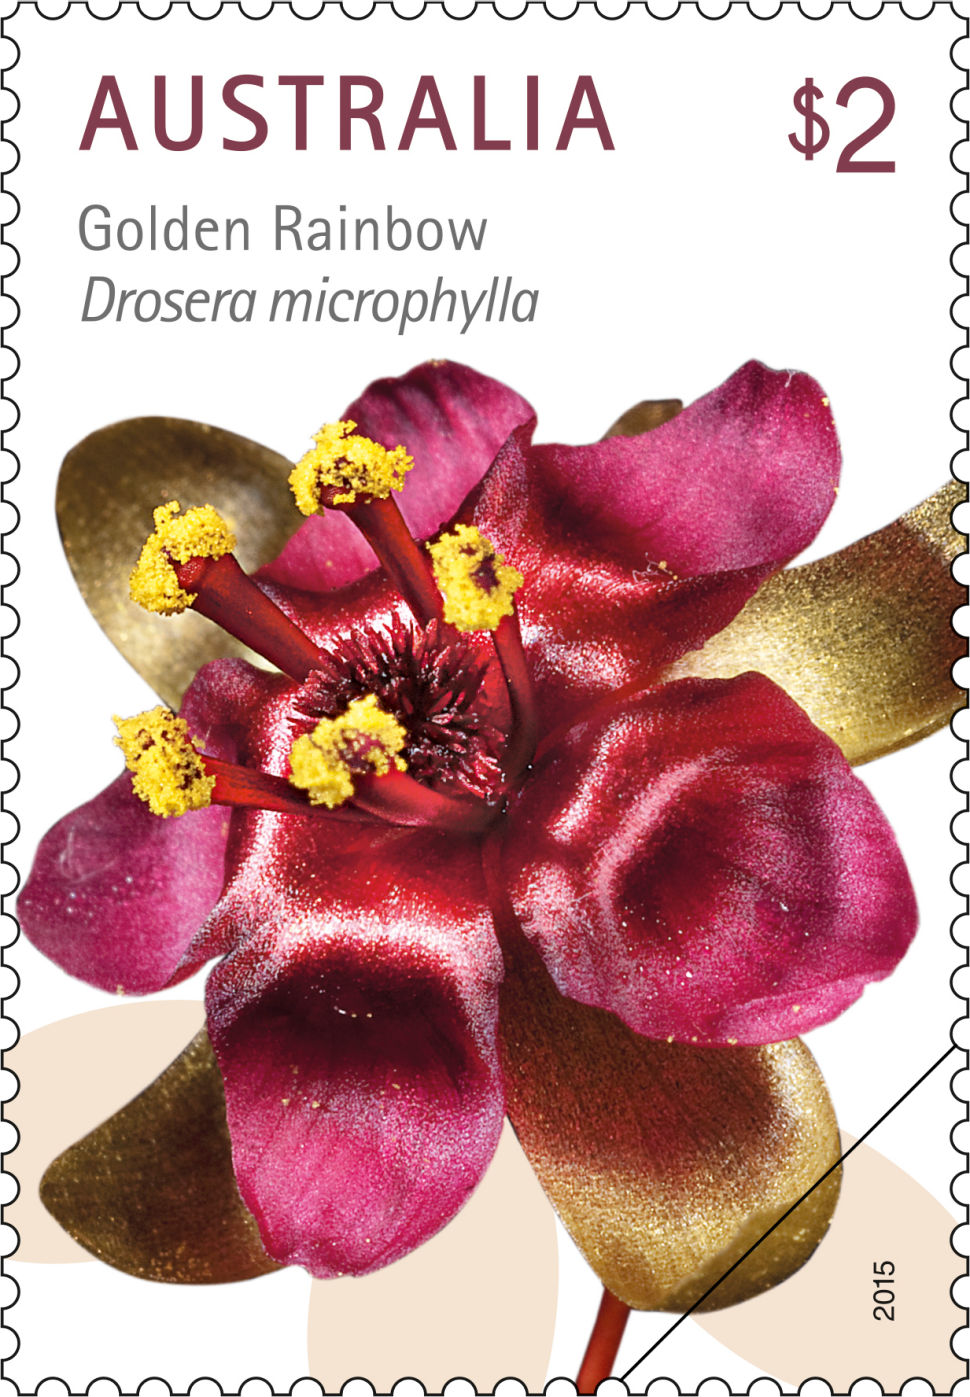 $2 - Golden Rainbow, Drosera microphylla